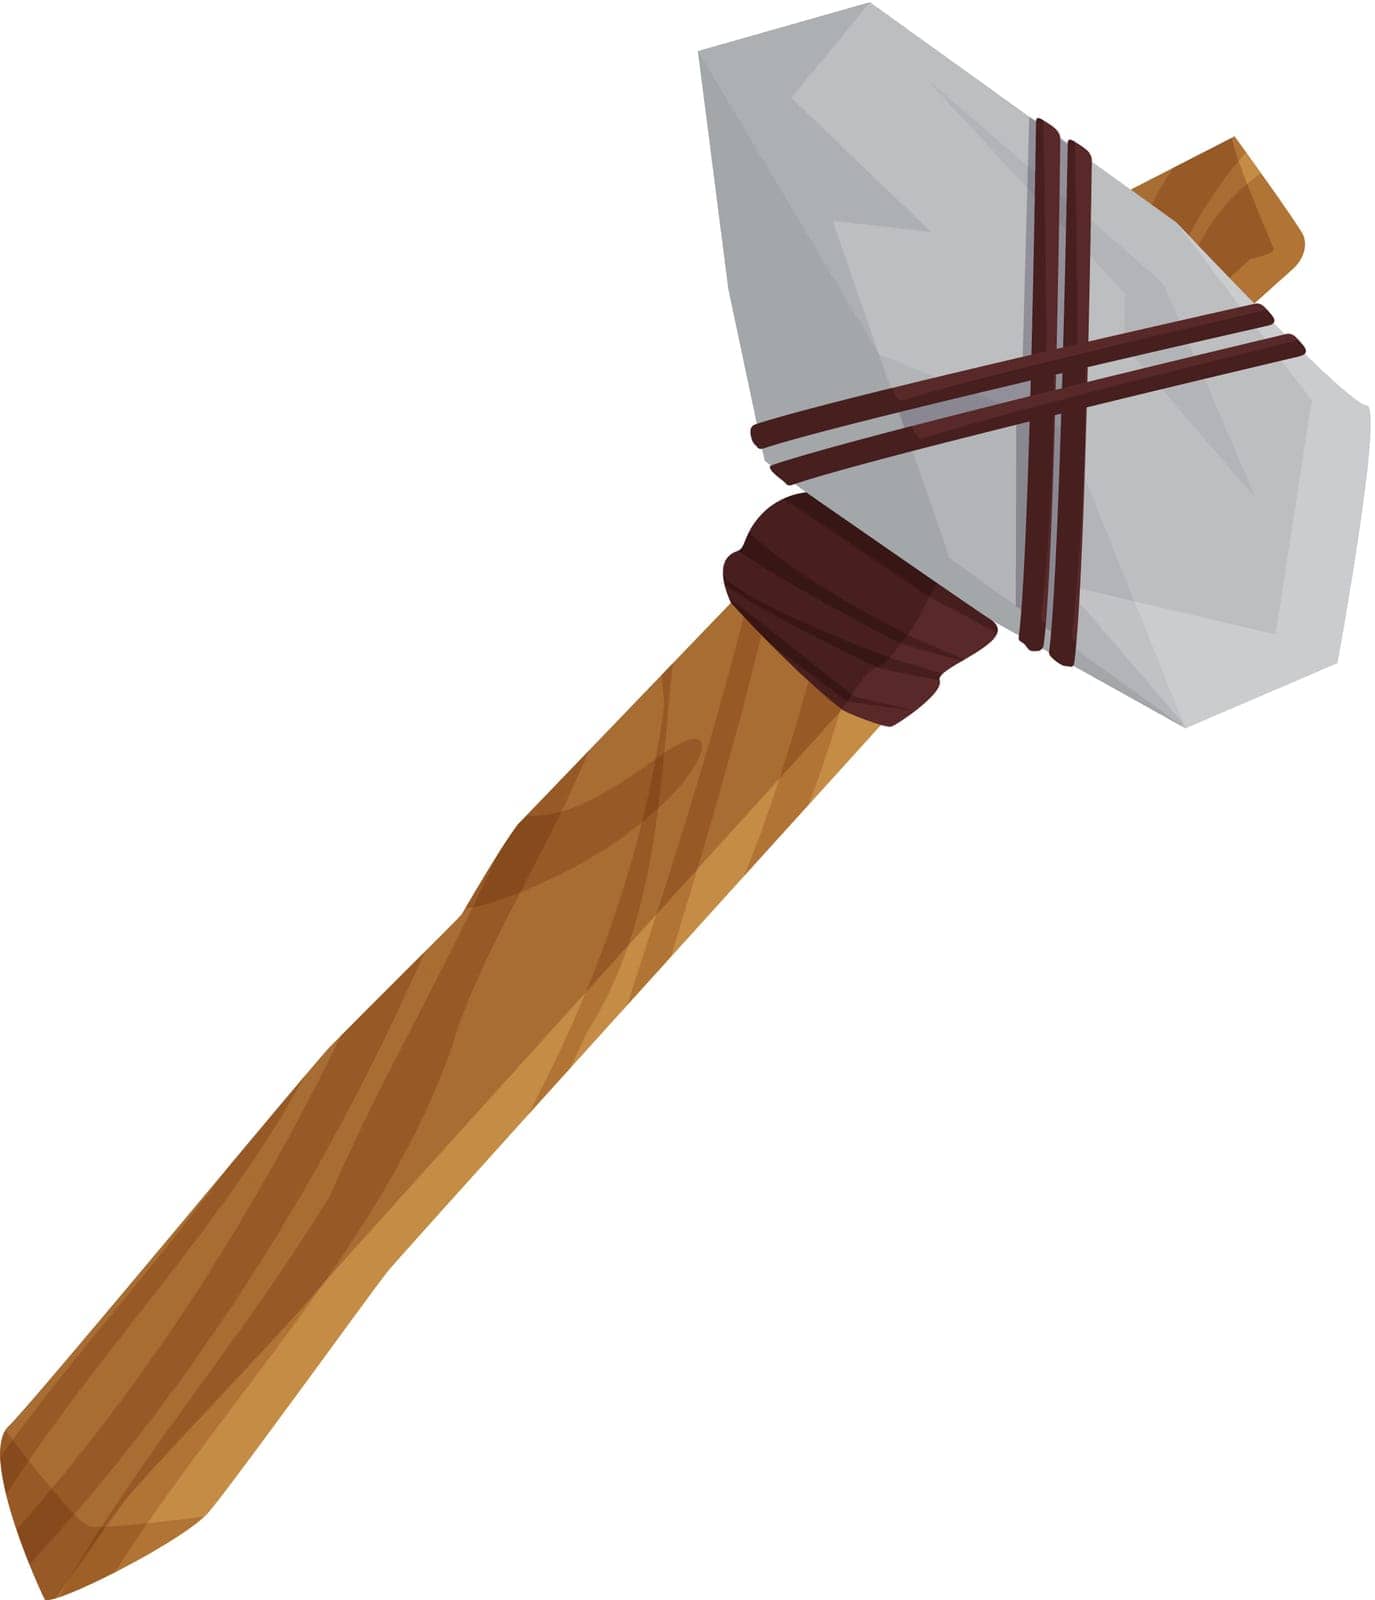 Stone age hammer. Caveman hunting tools, ancient objects cartoon vector illustration